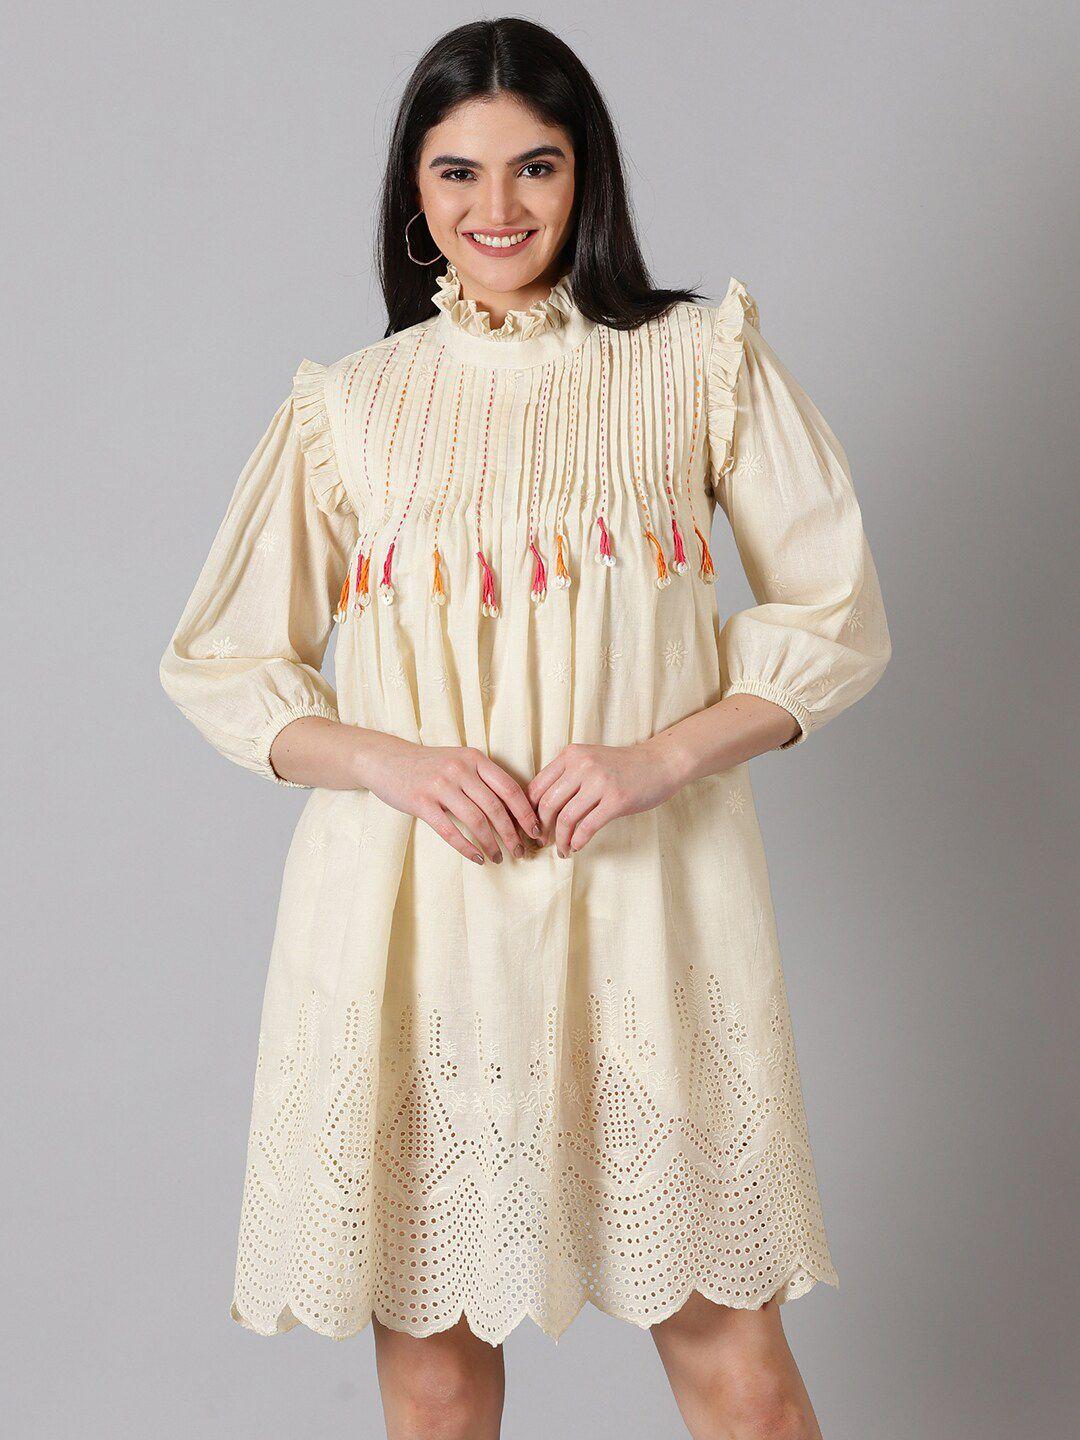 jilmil-embroidered-pin-tuck-yoke-design-high-neck-schiffli-gathered-cotton-a-line-dress